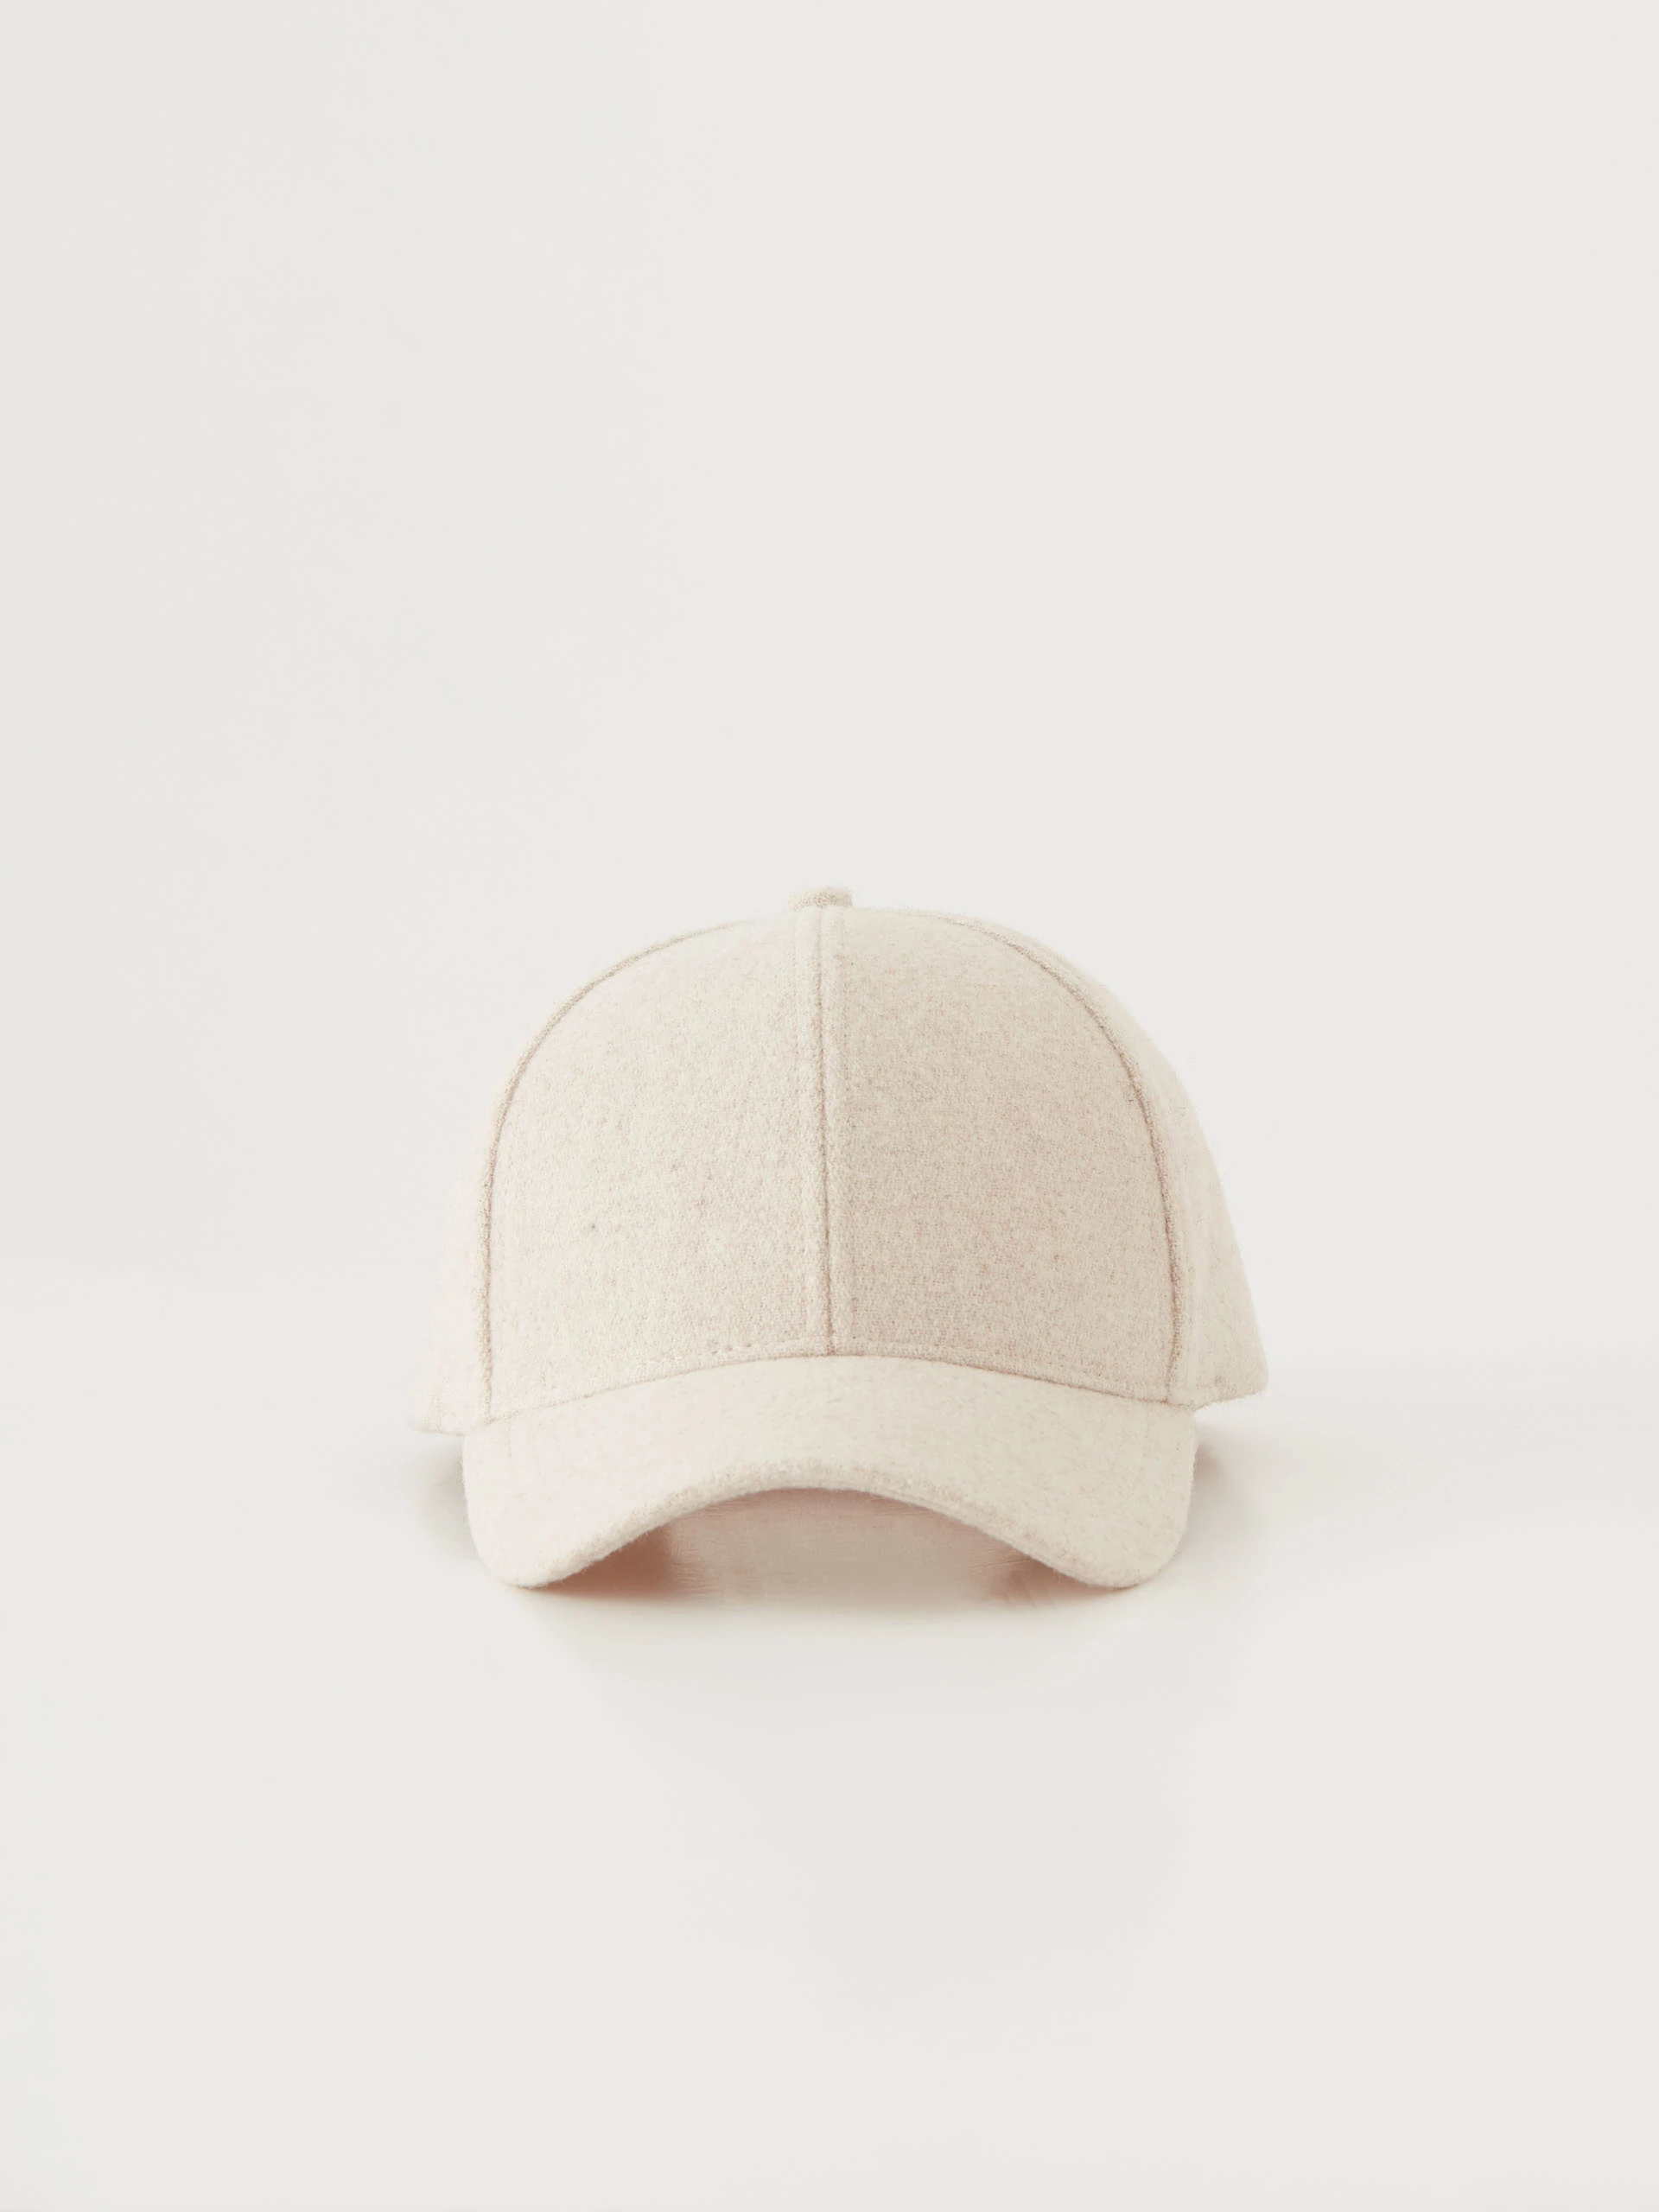 Beige baseball cap with wool fabric-Taranko